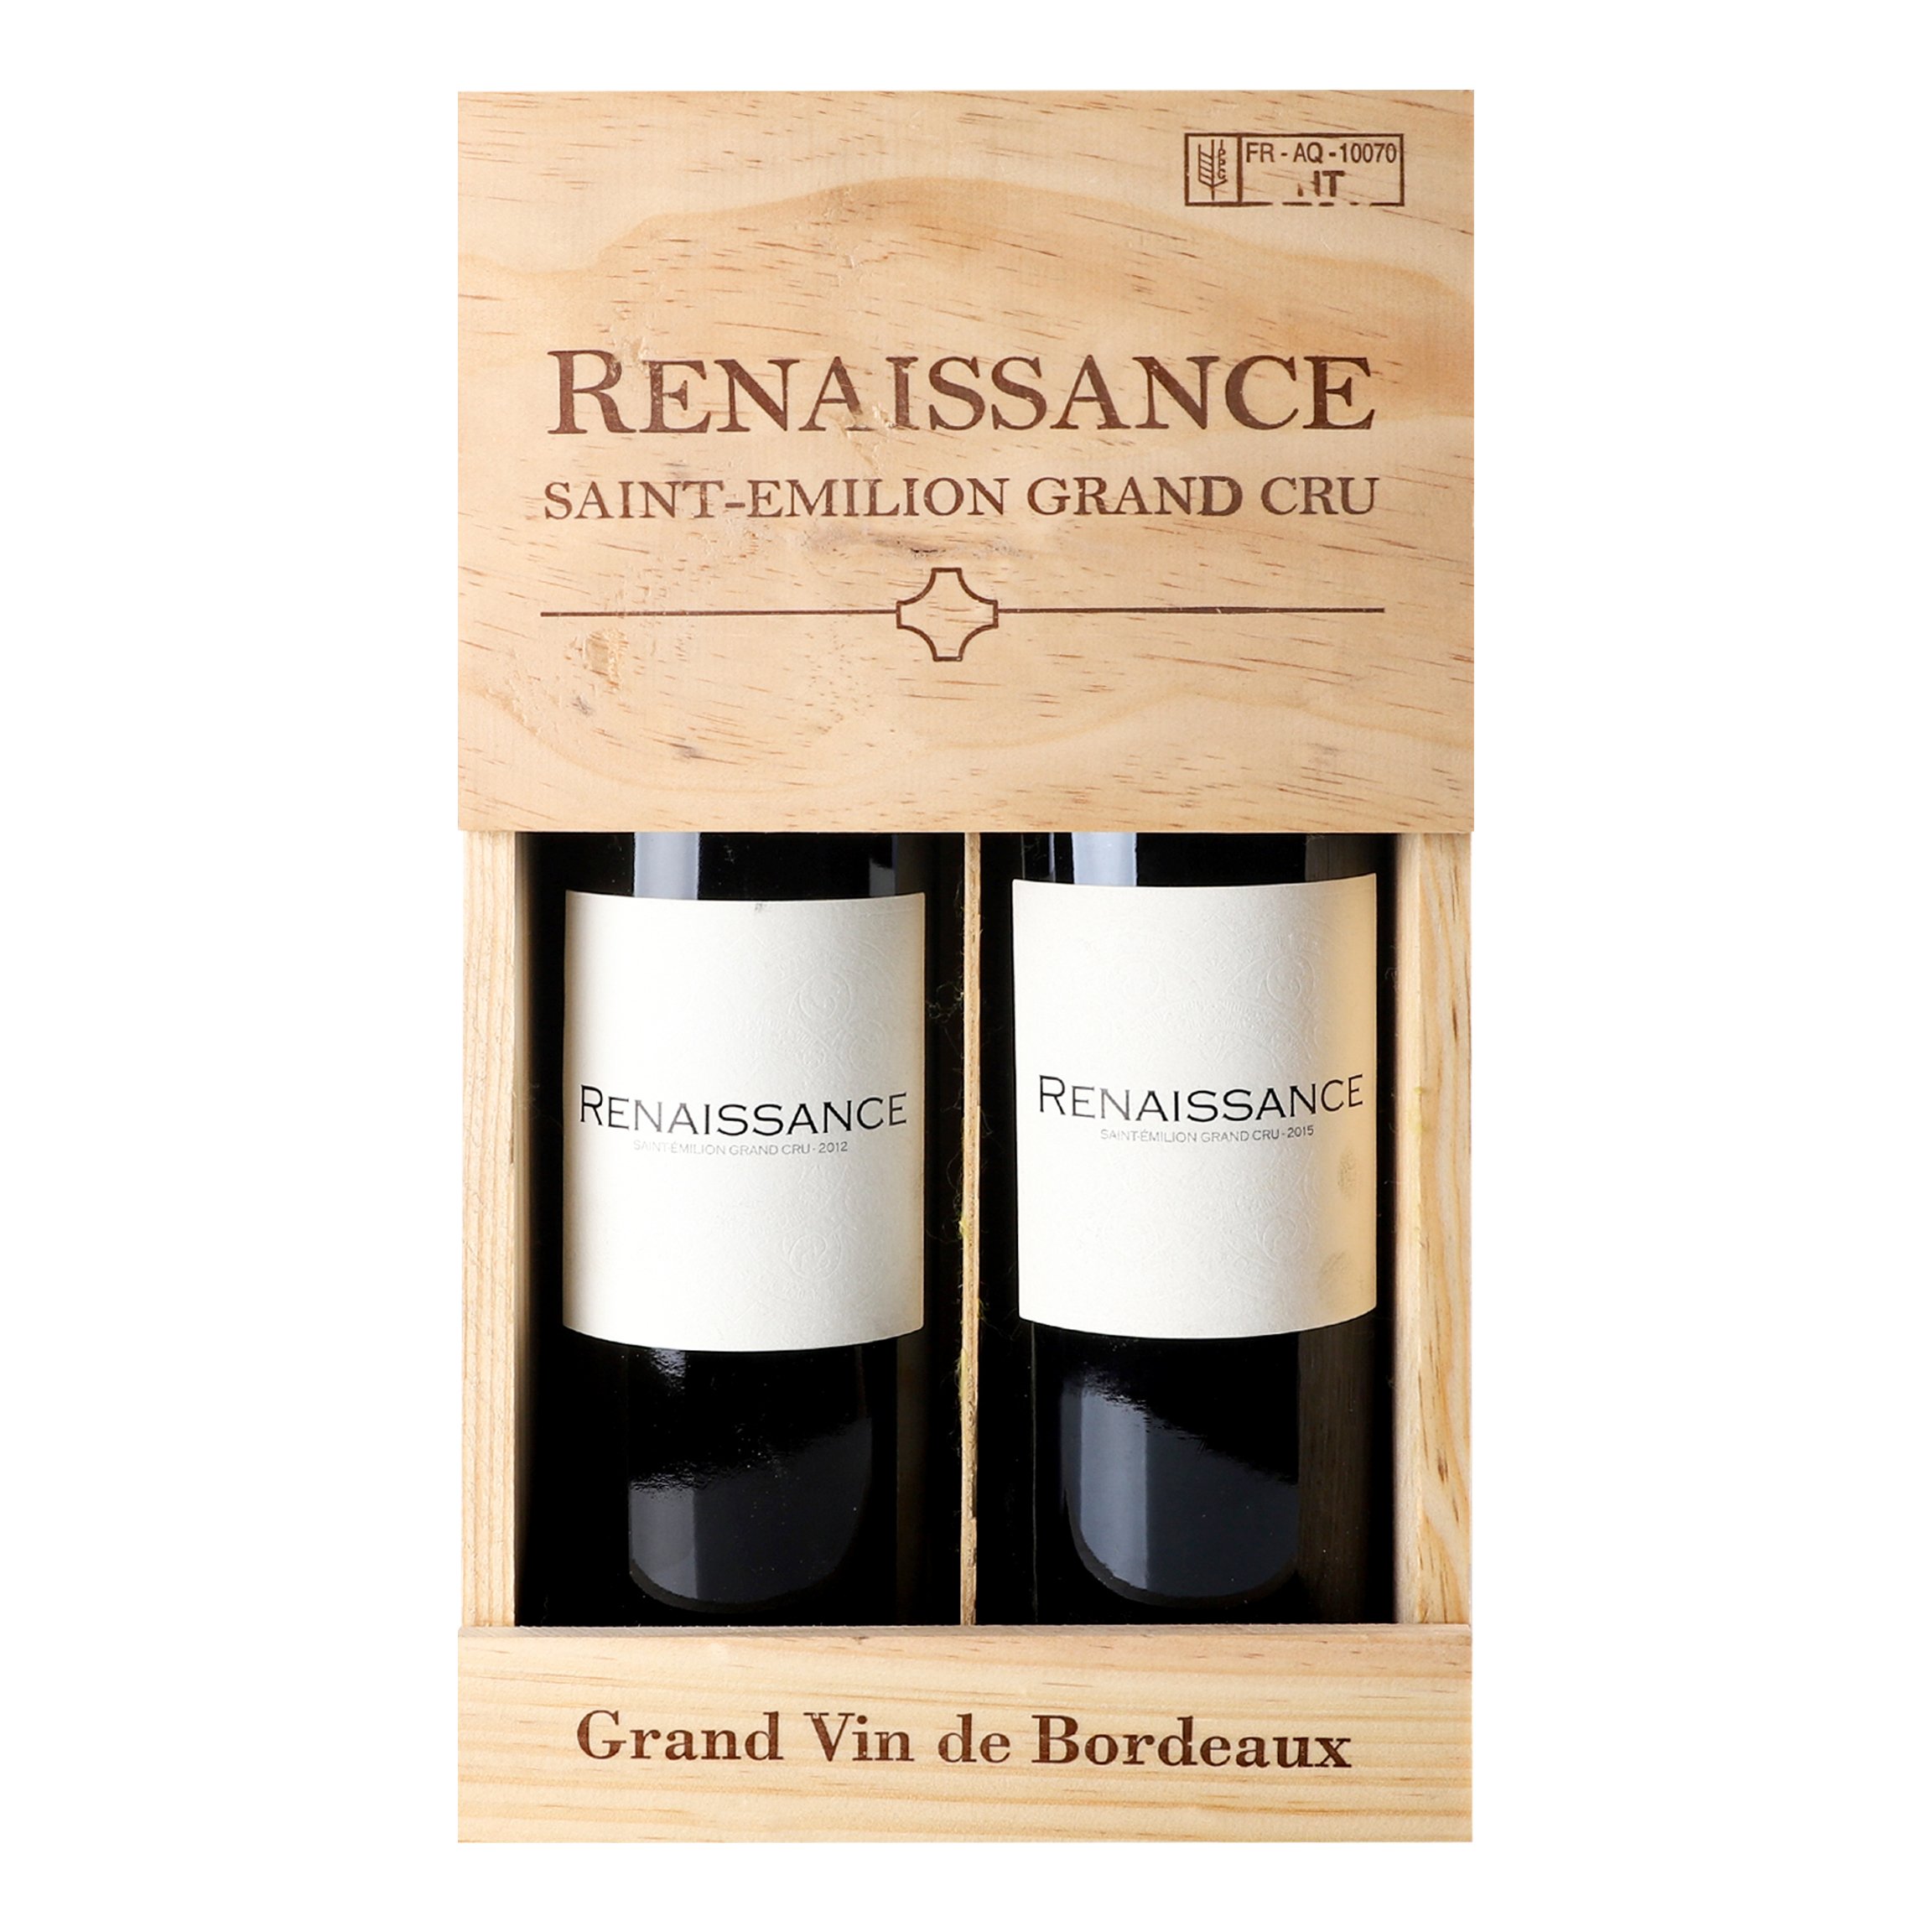 Набор вина Chateau Les Religieuses Renaissance, 2012&2015 года, красное, сухое, 12,5%, 0,75 л - фото 1